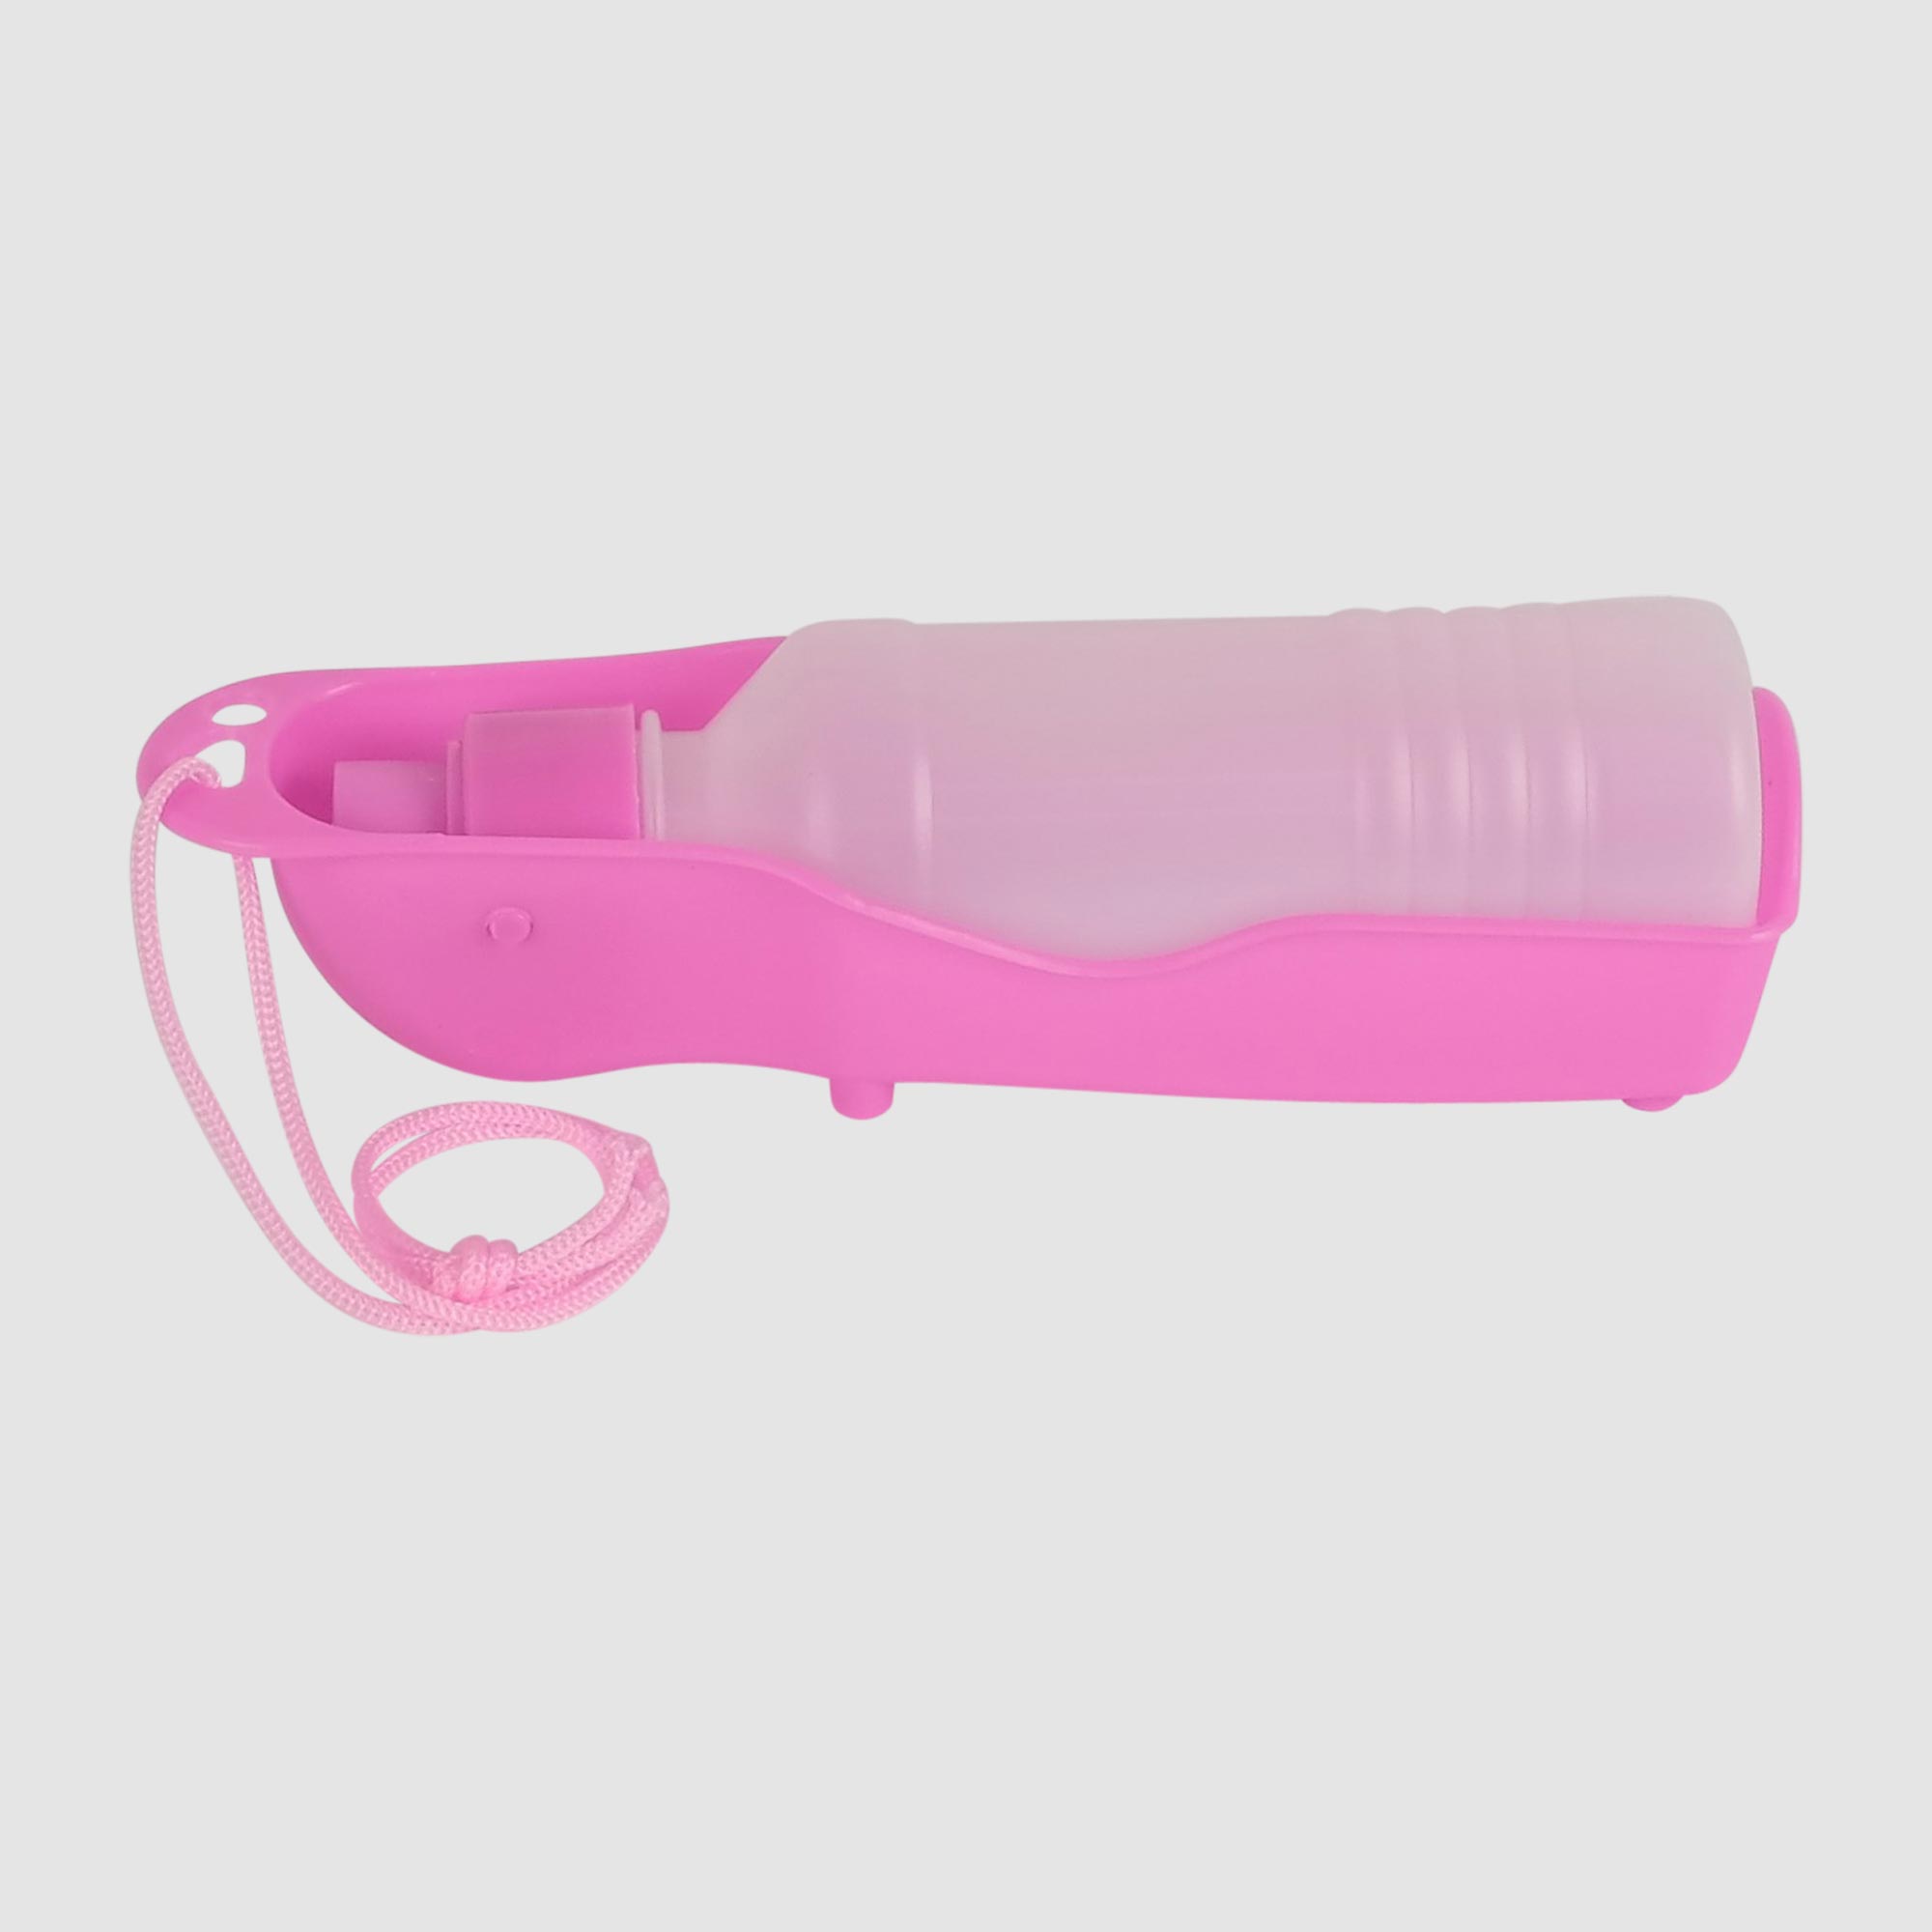 Lou & Co Portable Water Bottle Pink SM